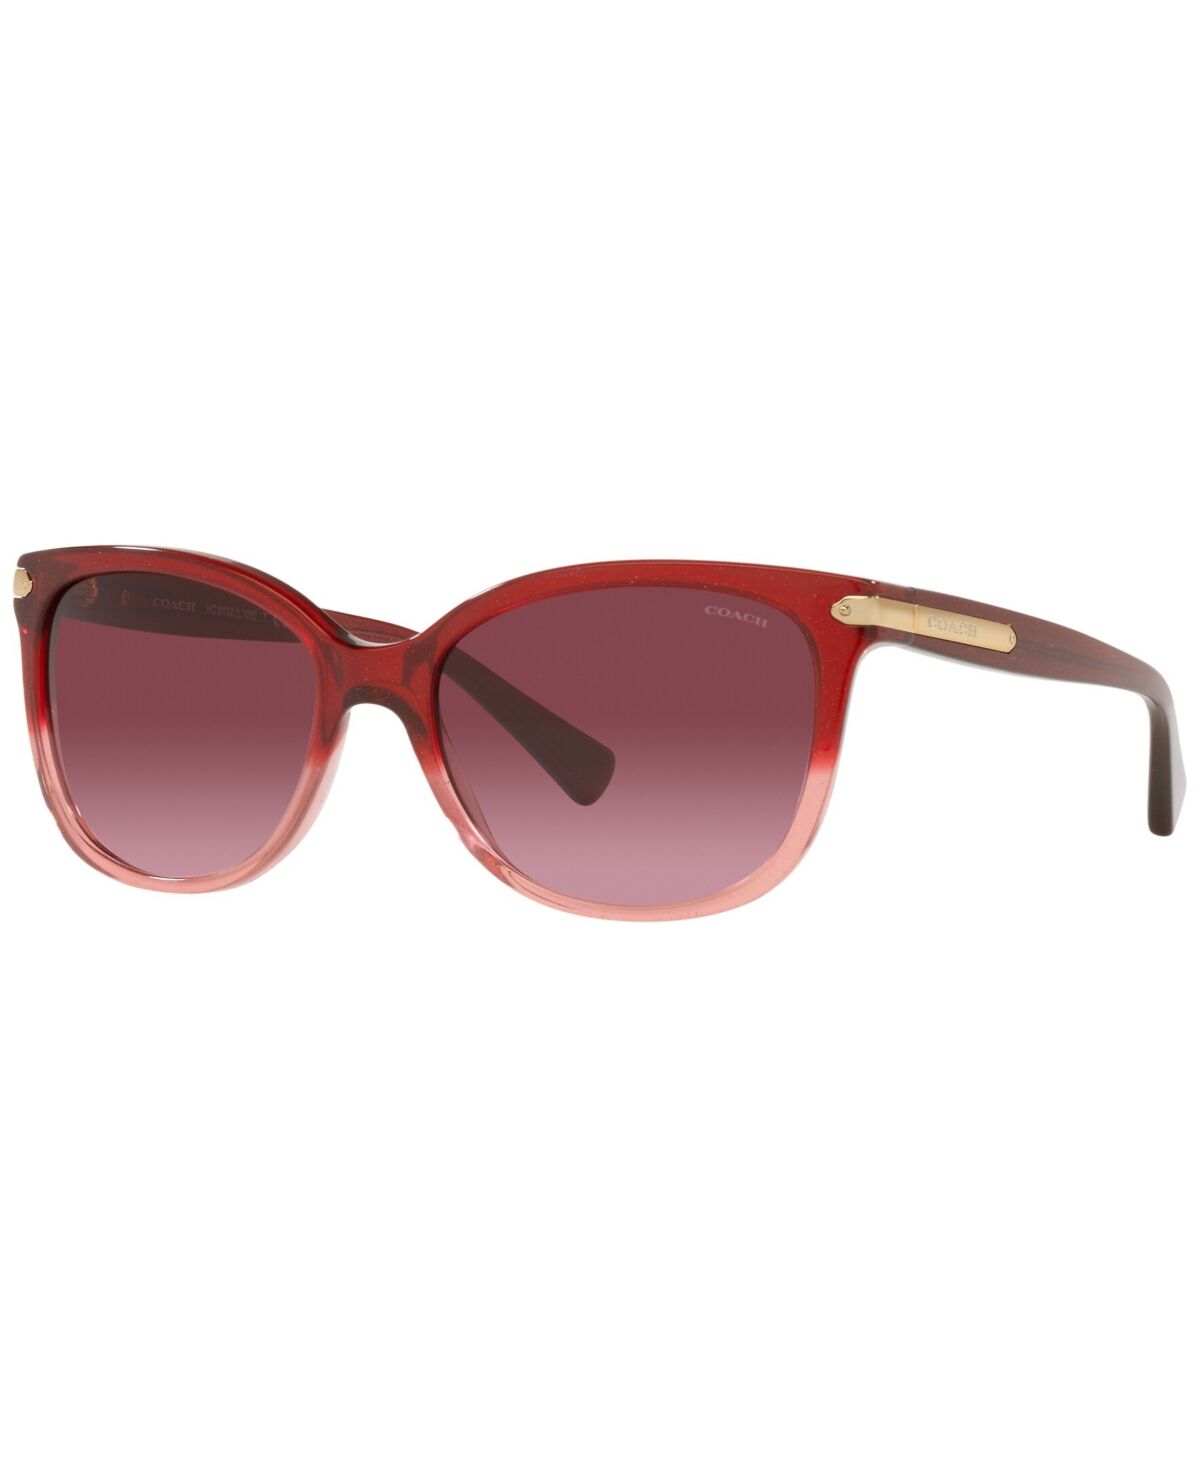 Coach Women's Sunglasses, HC8132 - Shimmer Burgundy Pink Gradient